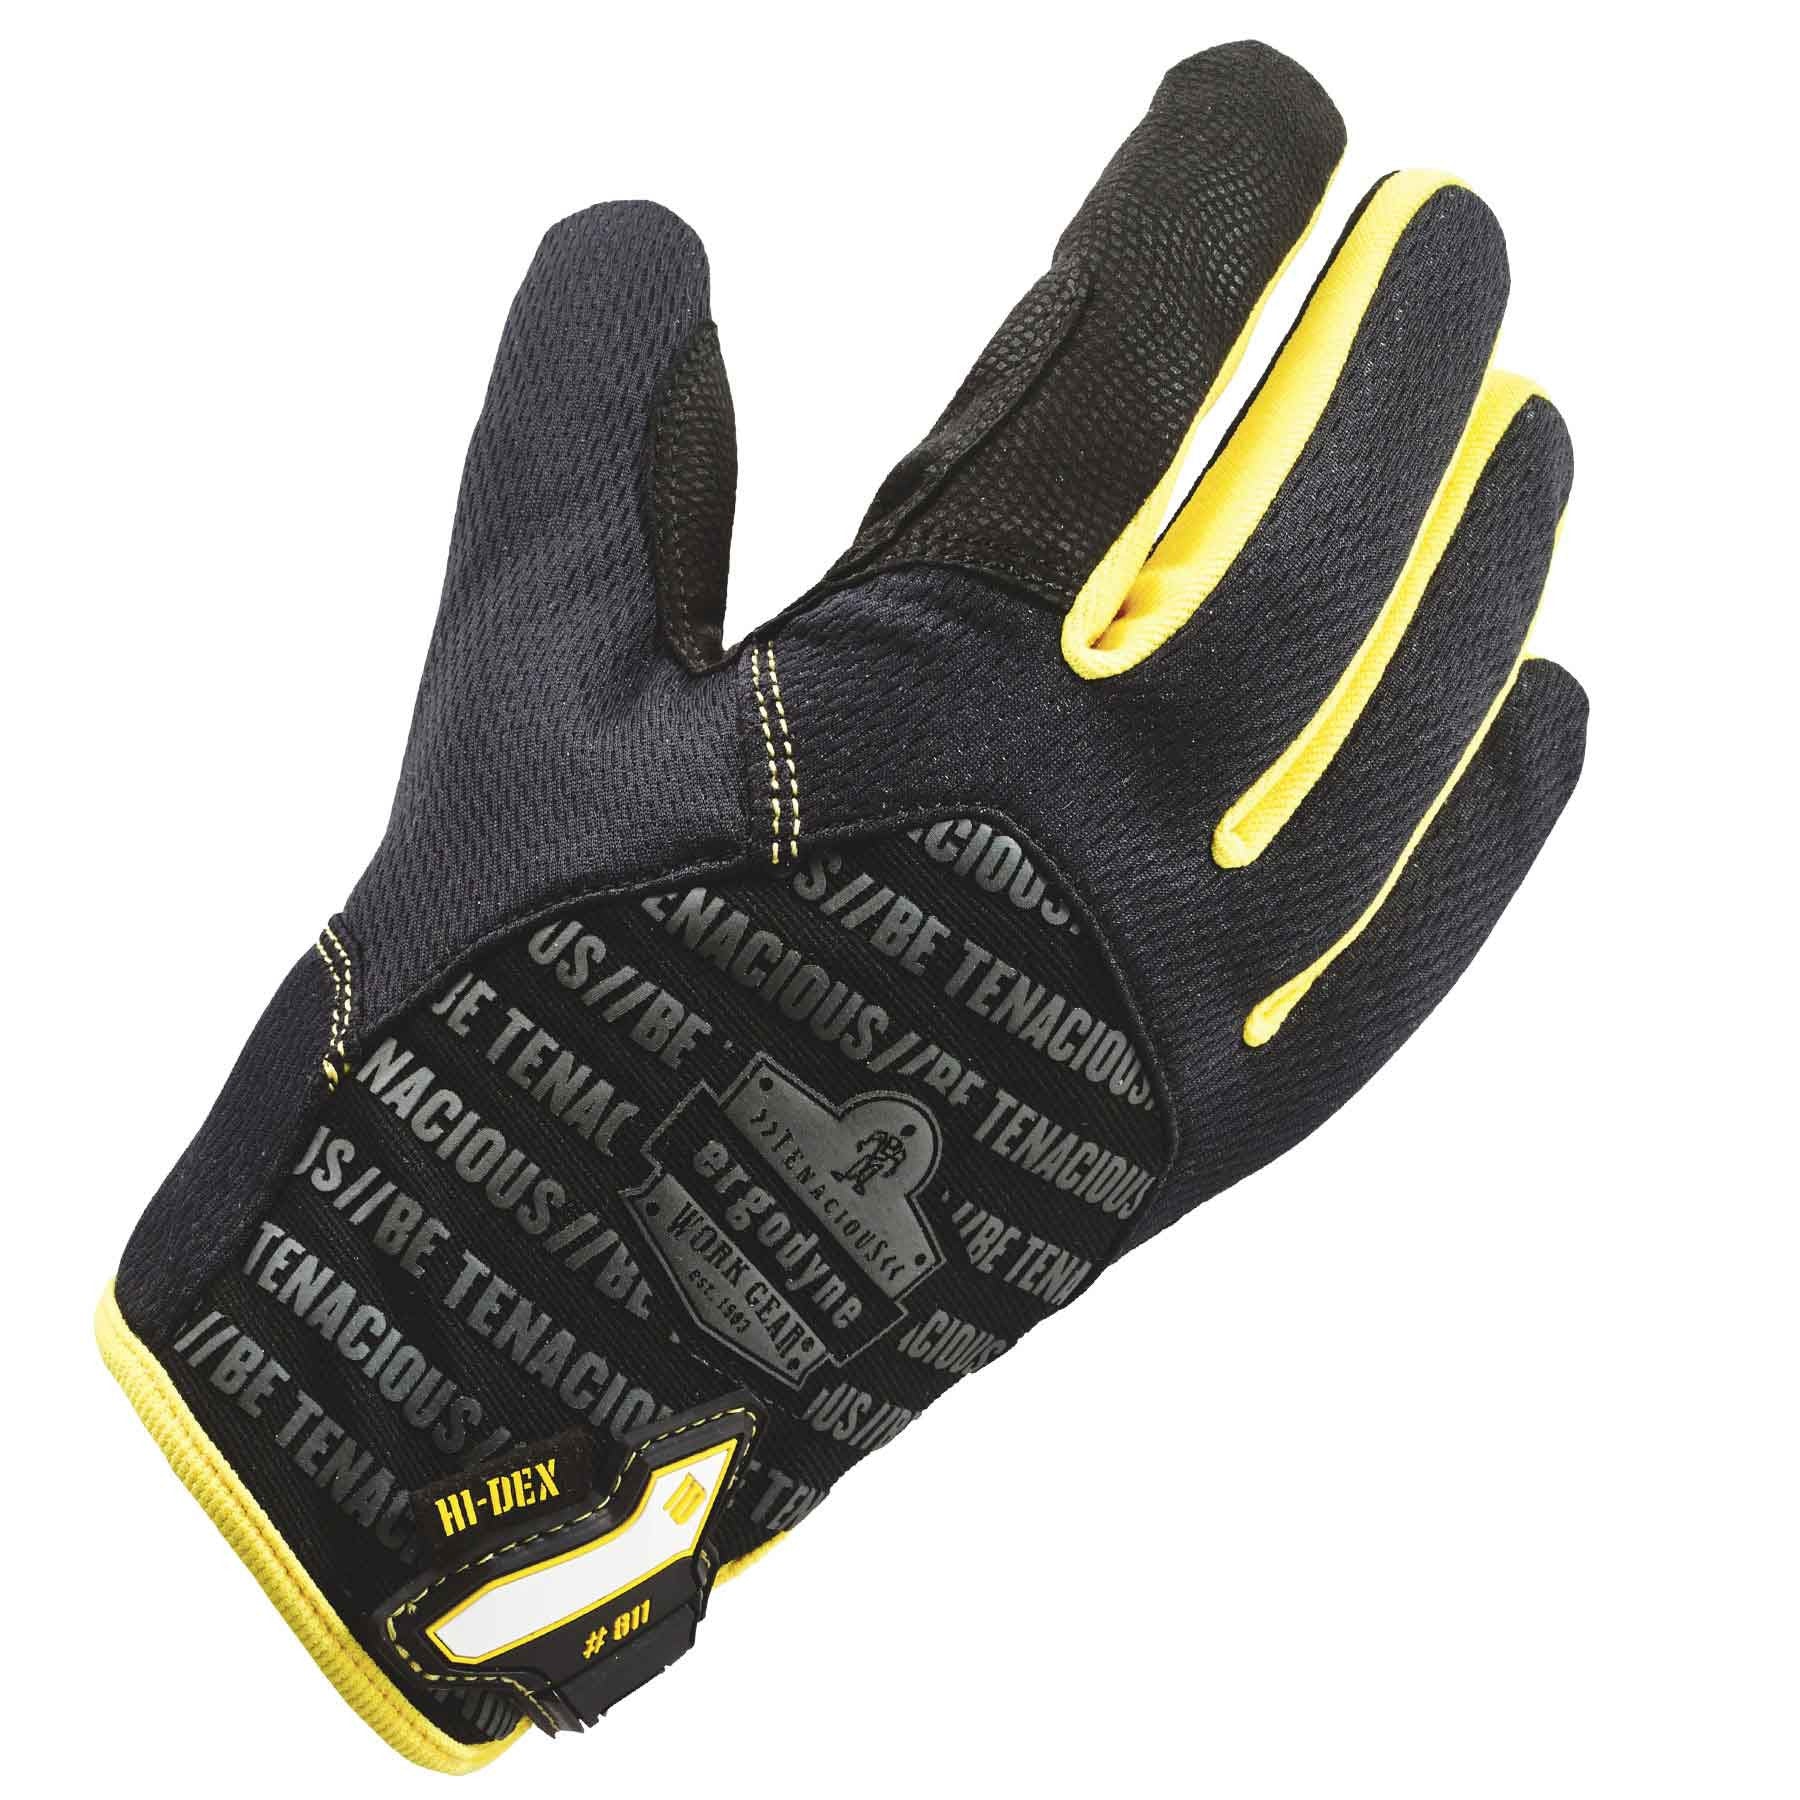 ProFlex 811 High Dexterity Utility Gloves-eSafety Supplies, Inc